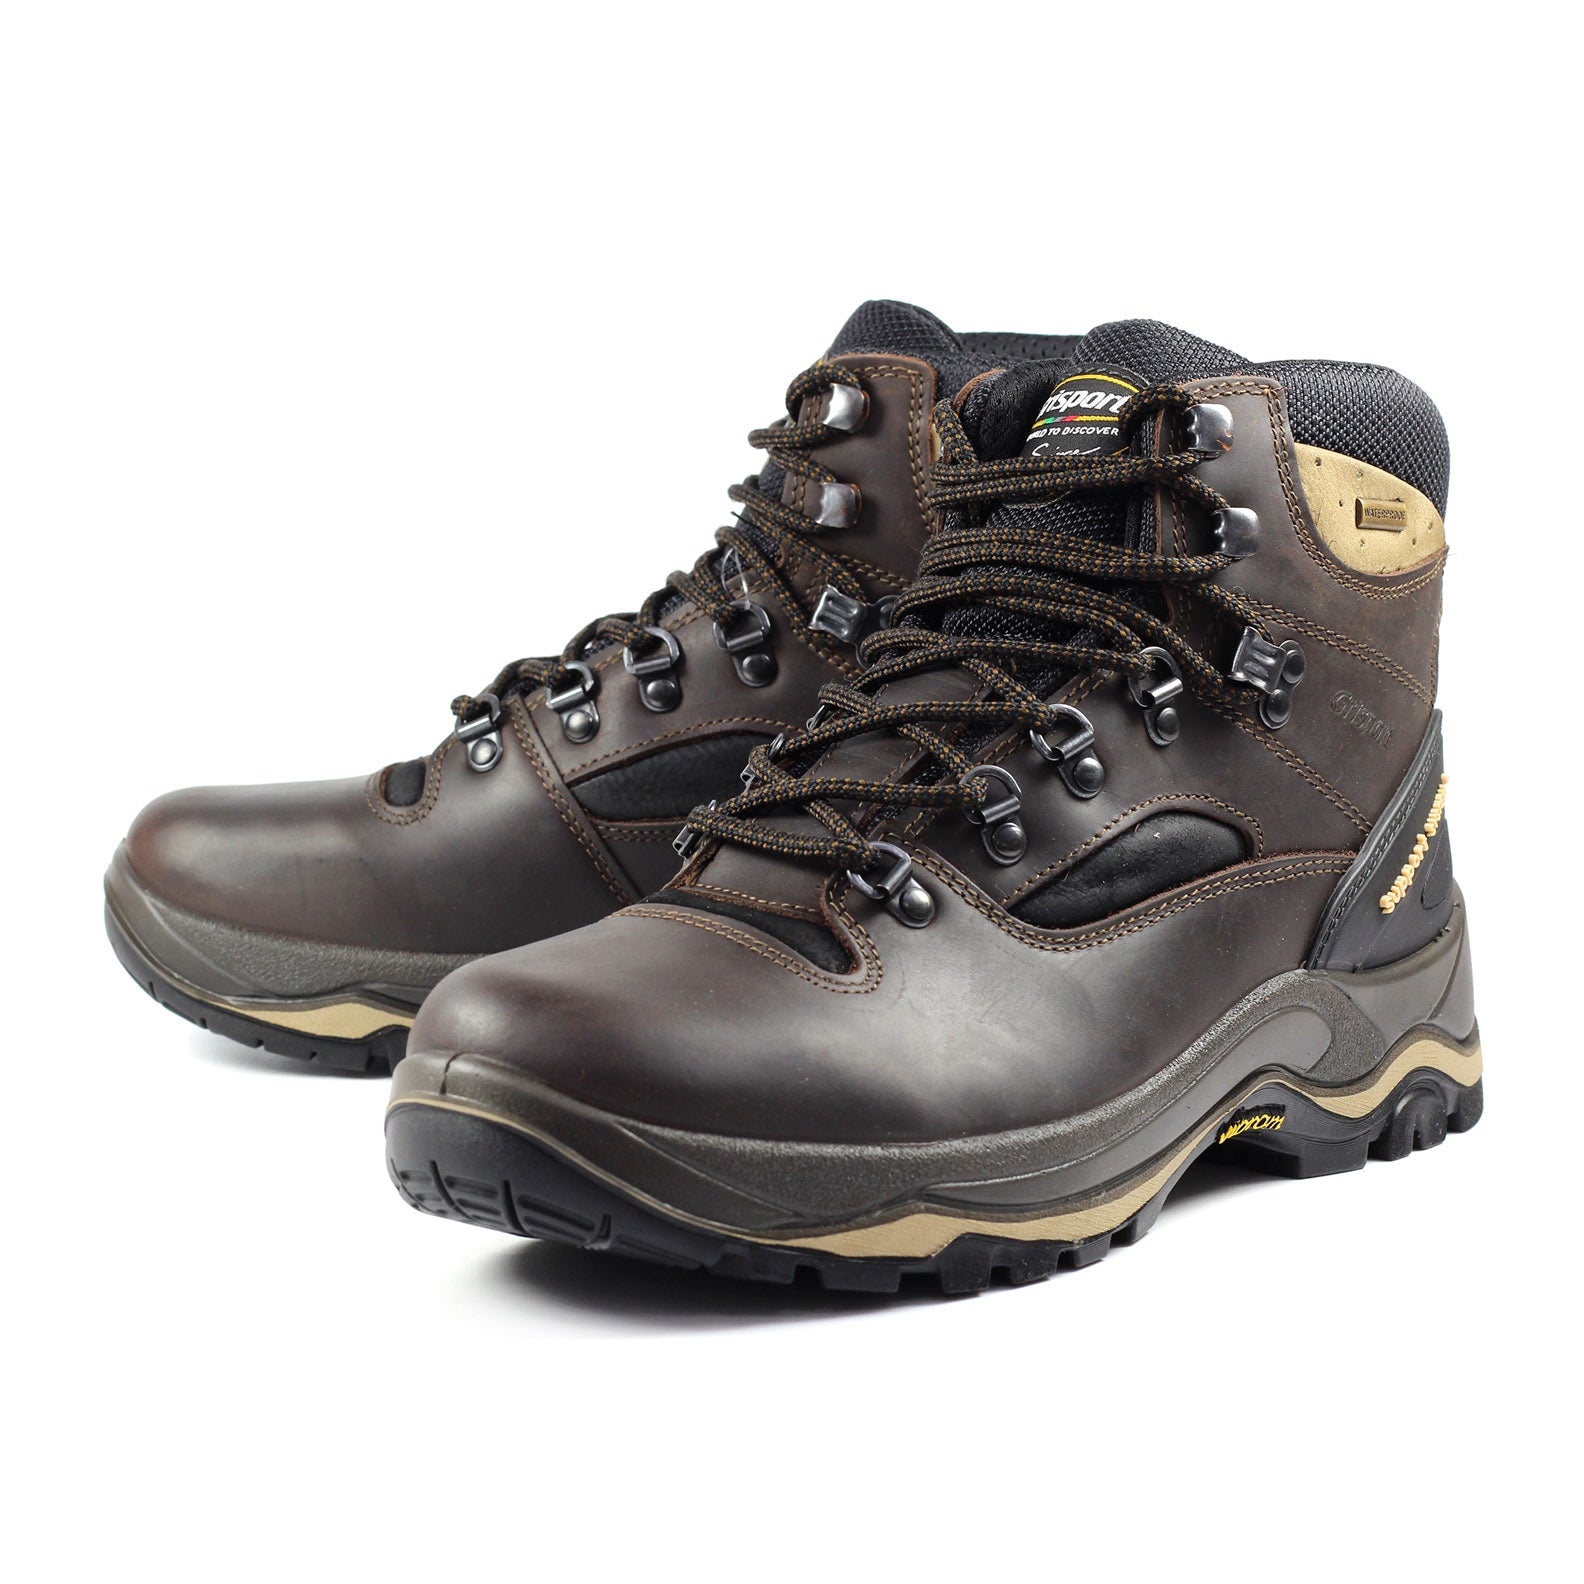 Grisport-Quatro-Hiking-Boots